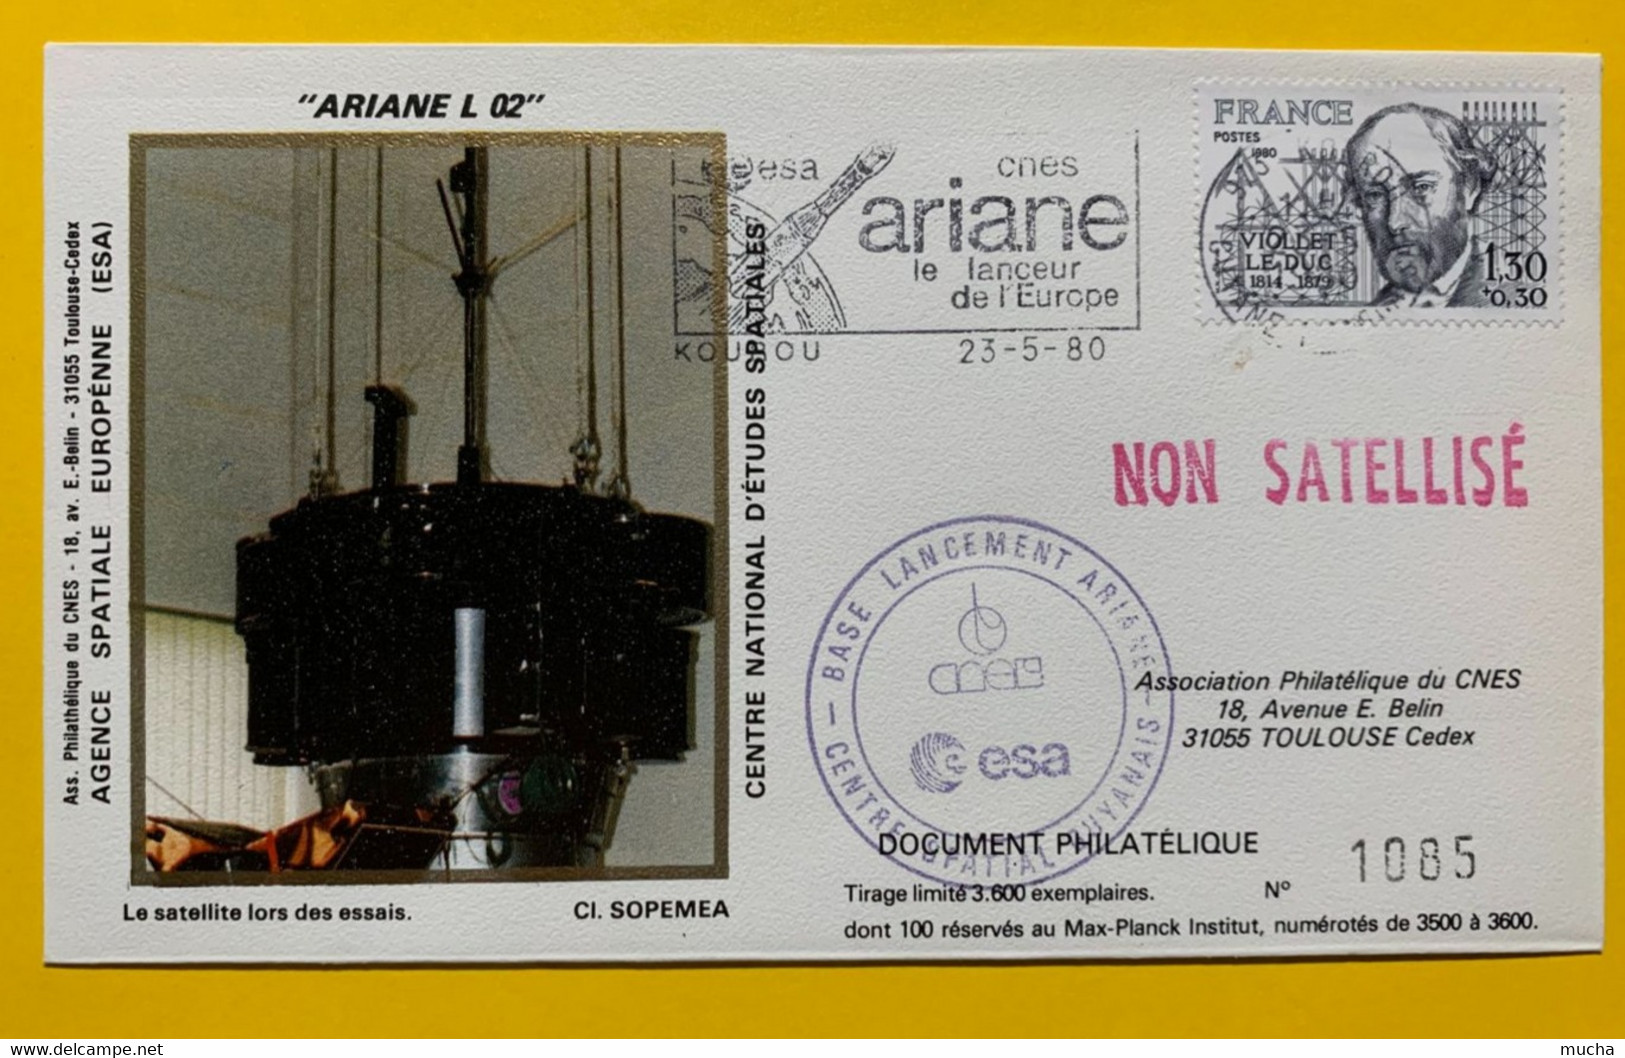 11183 - Ariane L02 Base De Lancement Kourou 23.05.1980  Satellite Firewheel  Cachet Rouge Non Satellisé - Europe